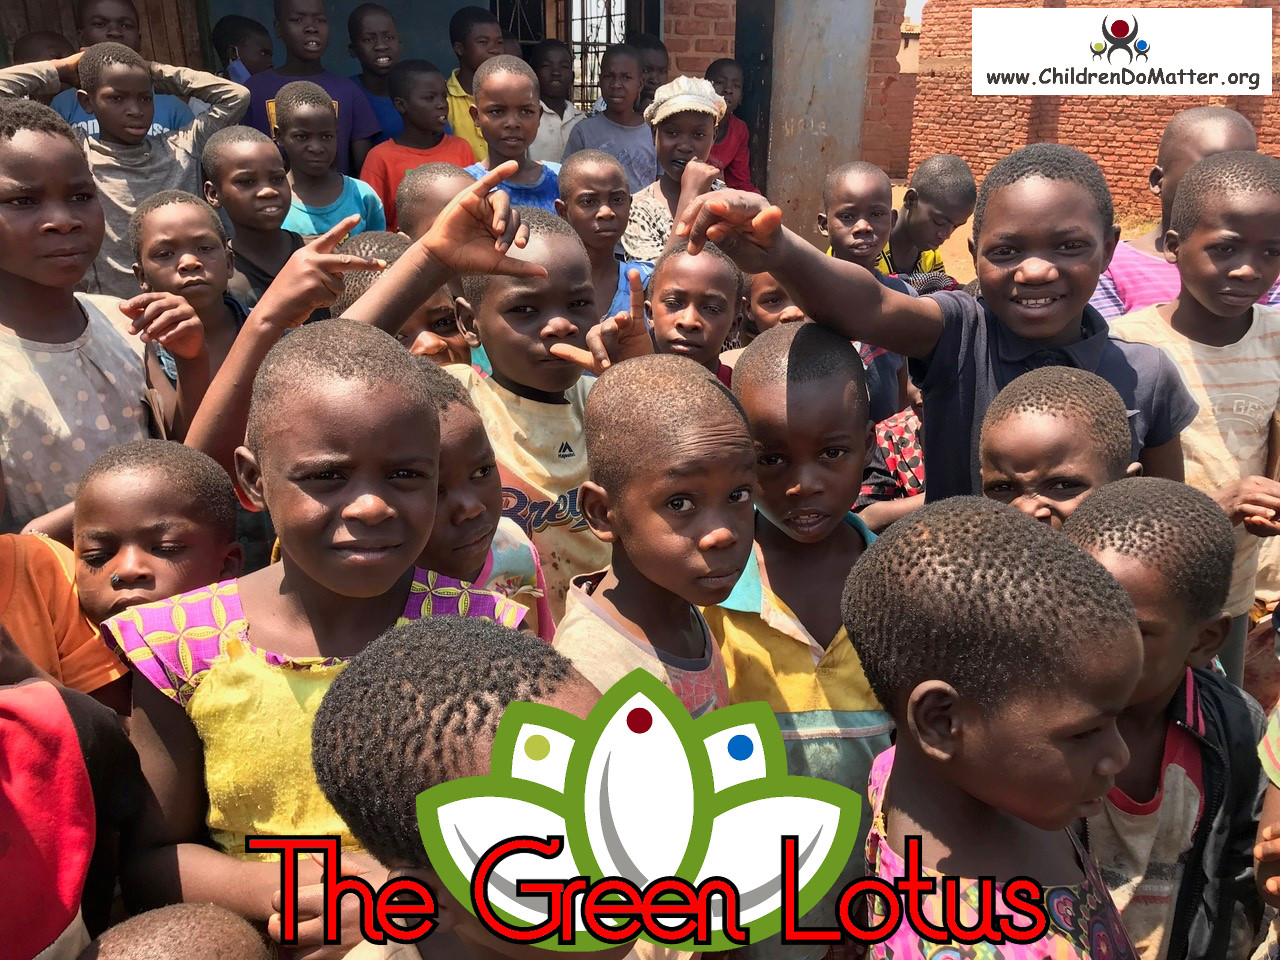 bambini senzatetto in malawi - orfanotrofio the green lotus - children do matter